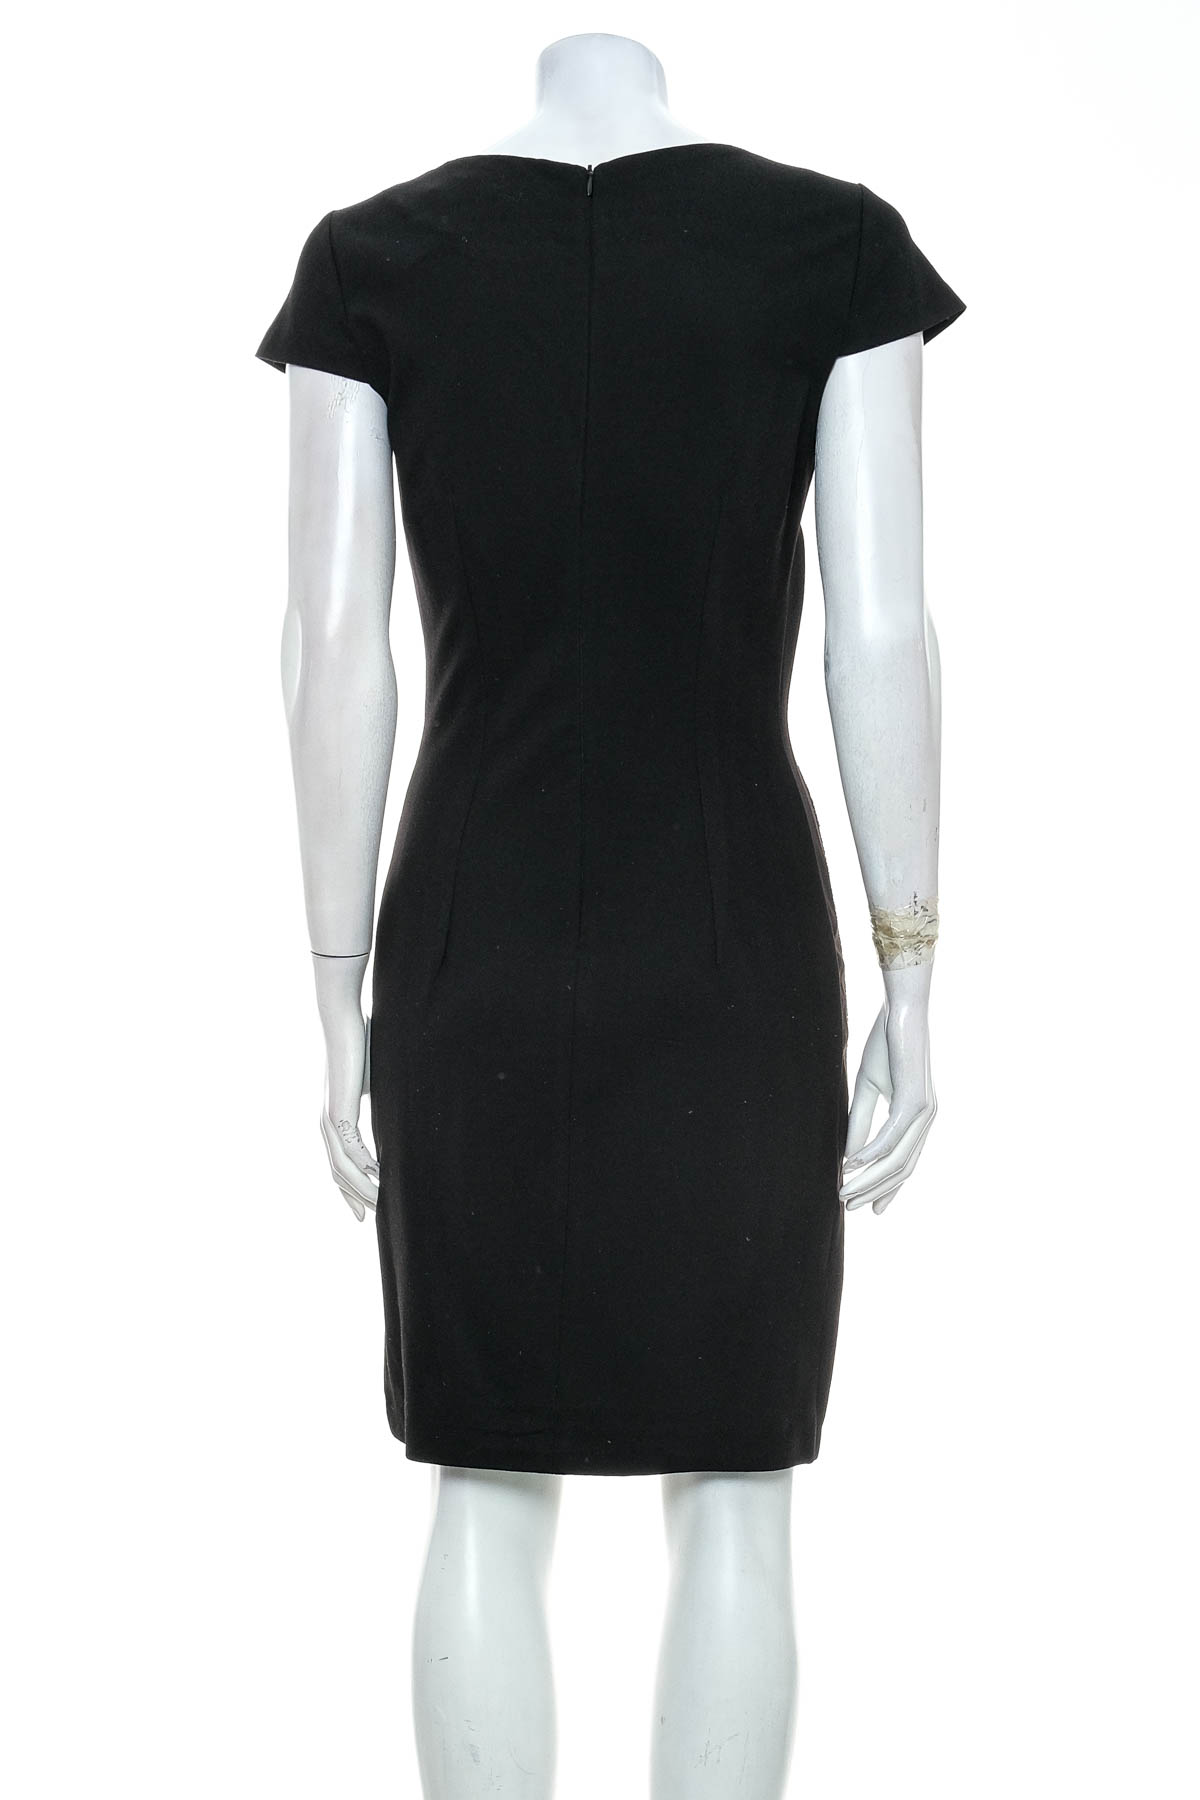 Dress - ASTRID BLACK LABEL - 1